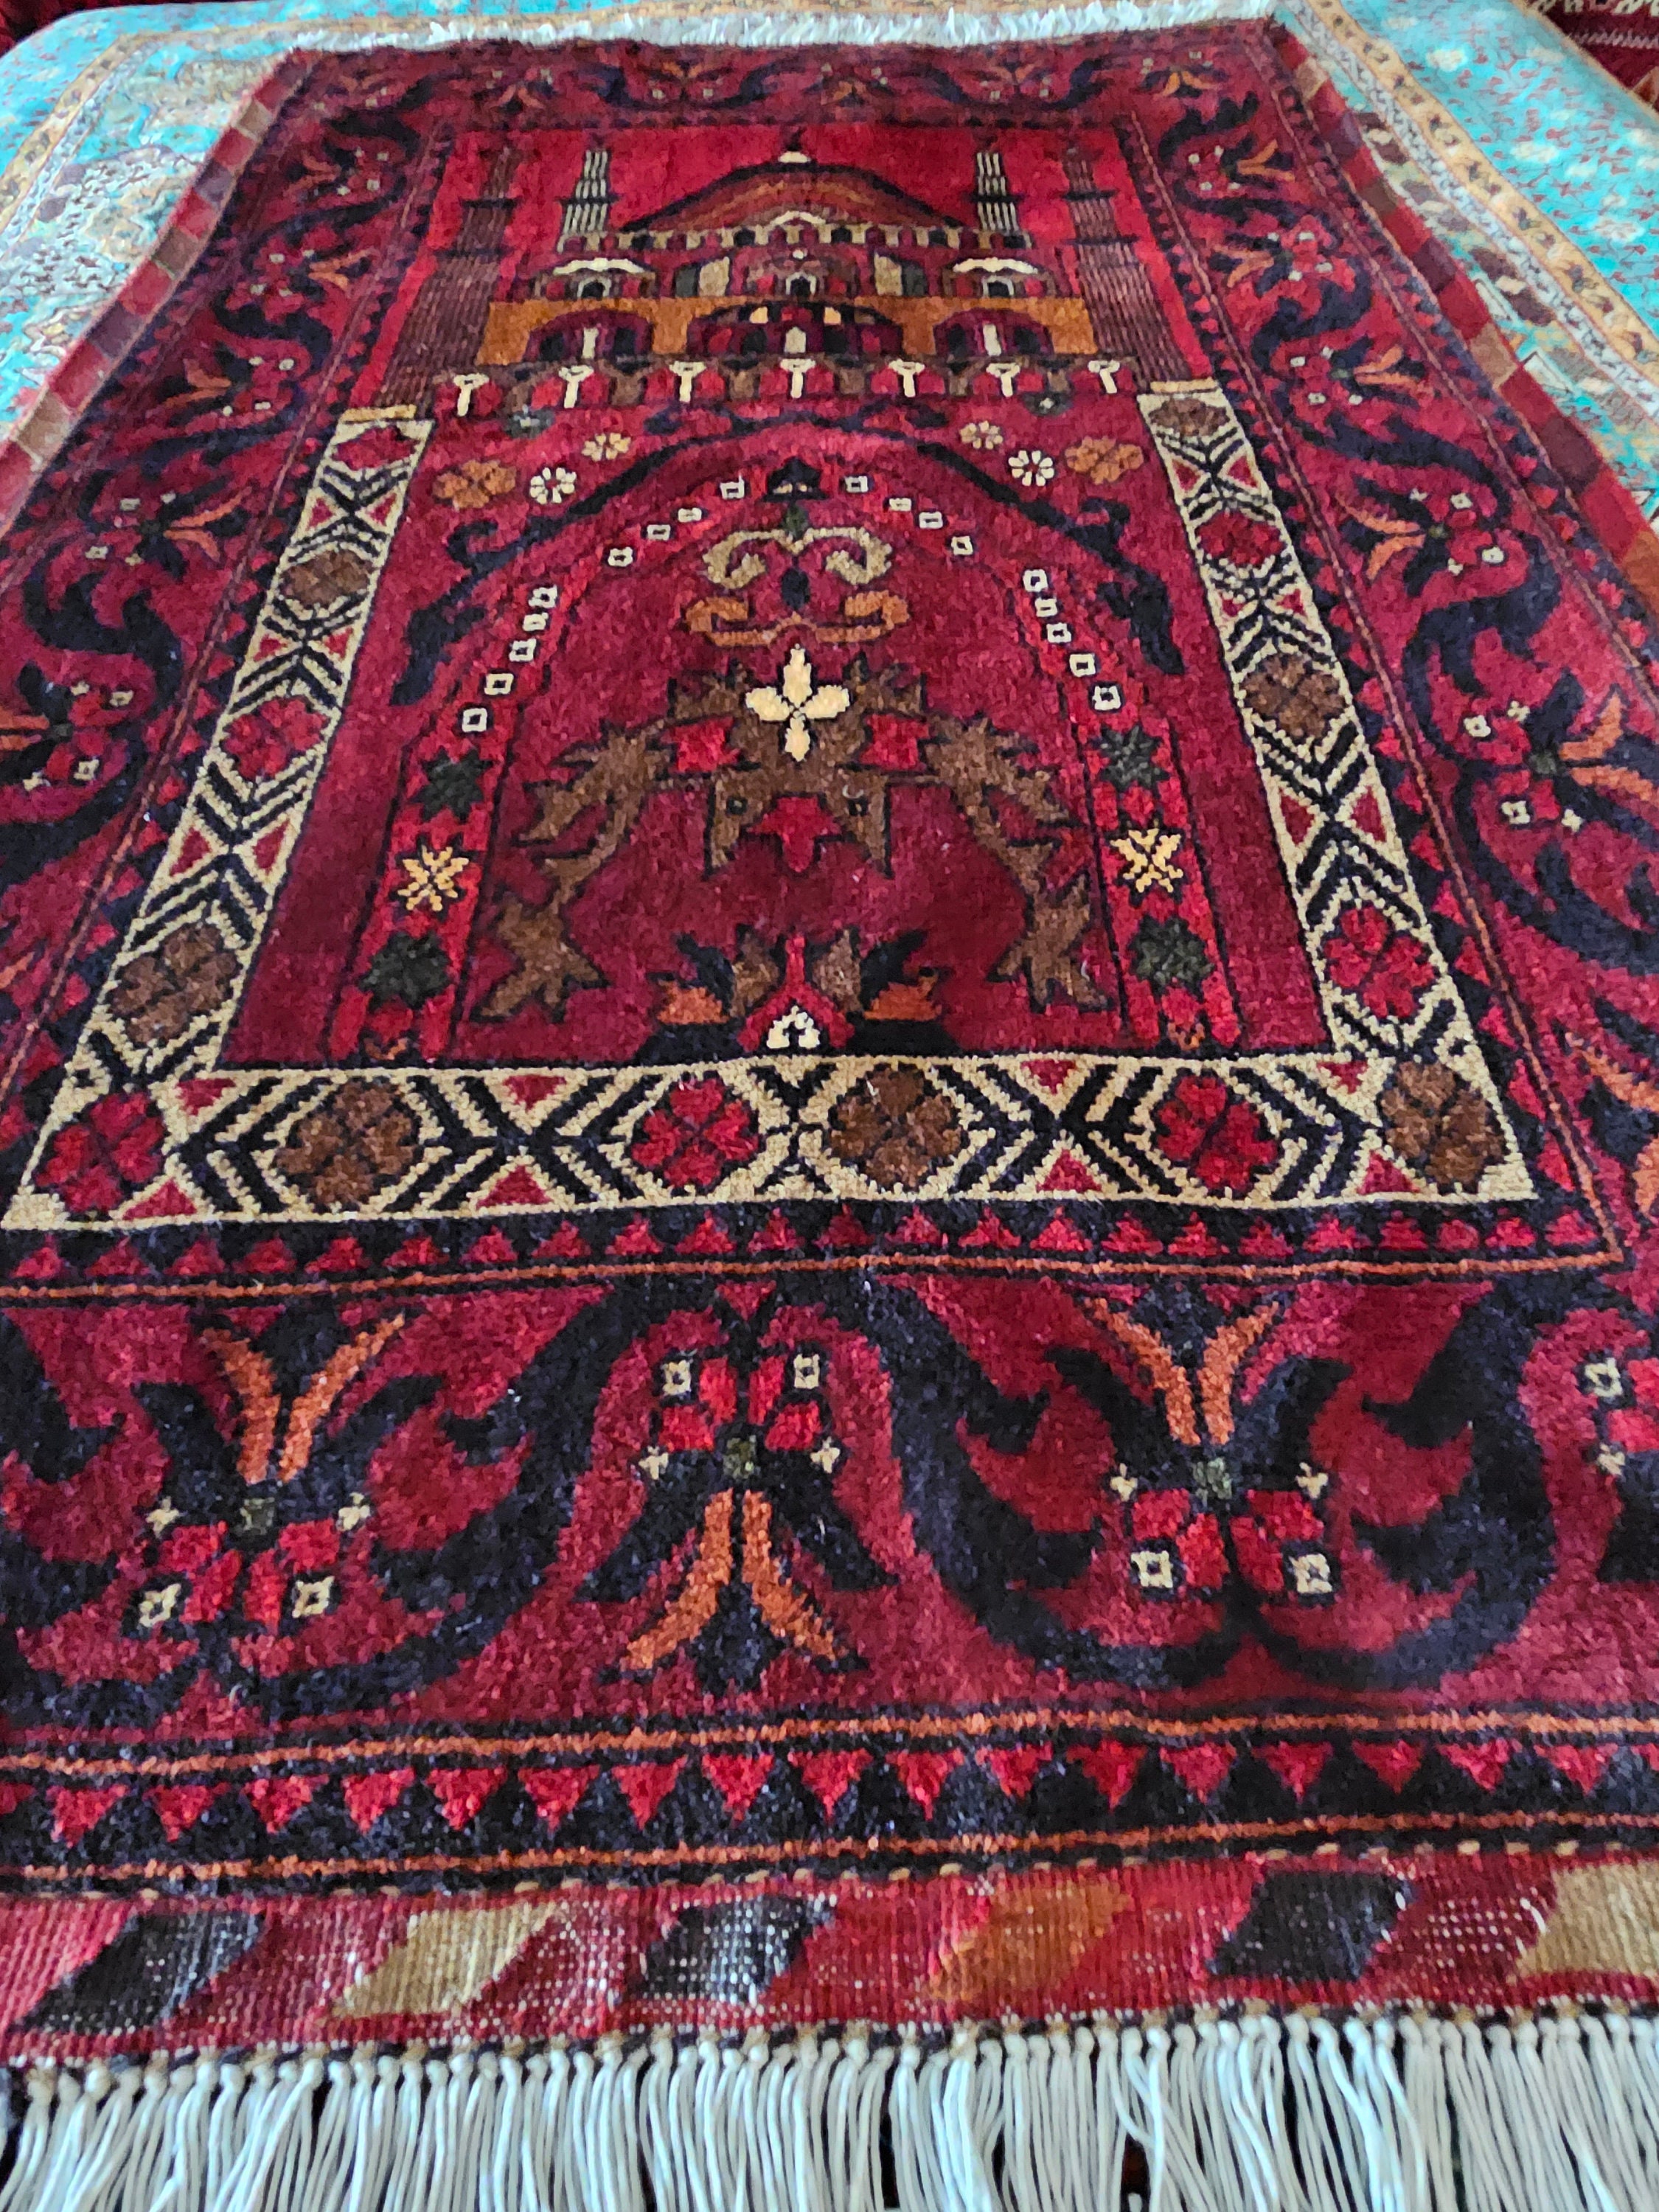 Well-made Amazingly Soft Prayer Mat - Prayer Rug - Janamaz - Elegant, High Quality, Luxury - A Unique Islamic Gift Set %100 Soft Wool